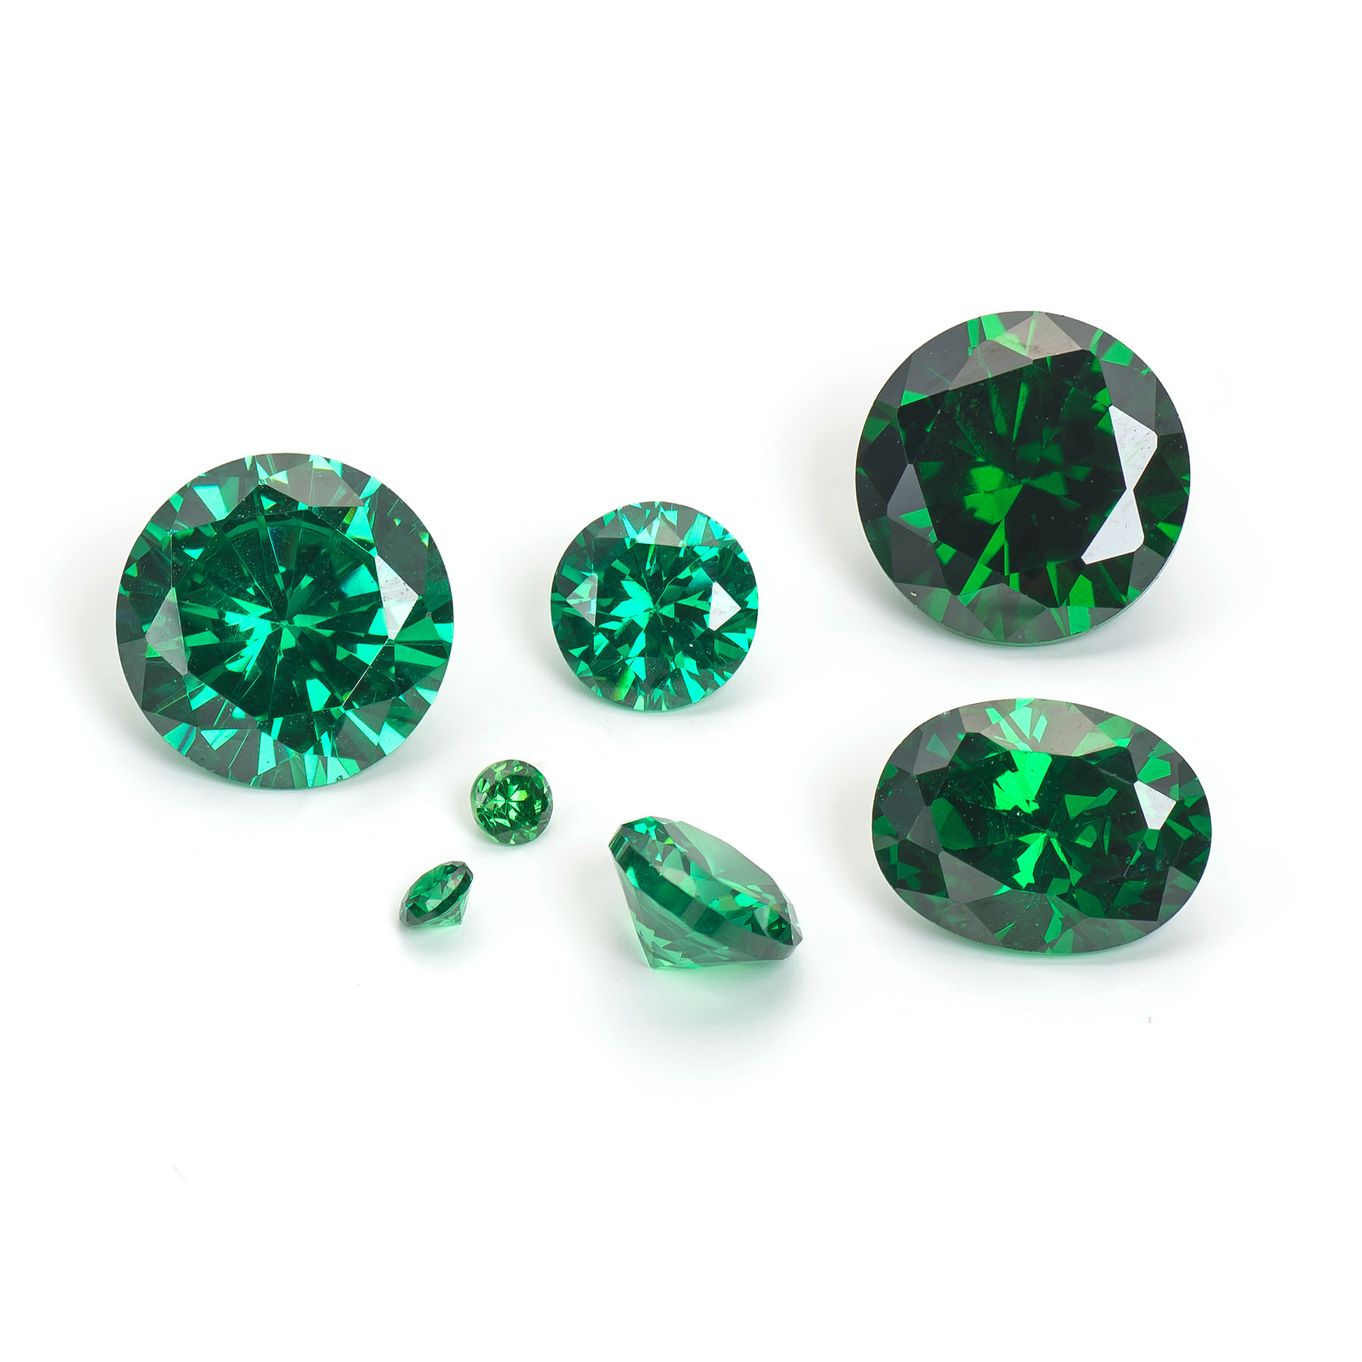 Emerald Coloured Cubic Zirconia Faceted Stones